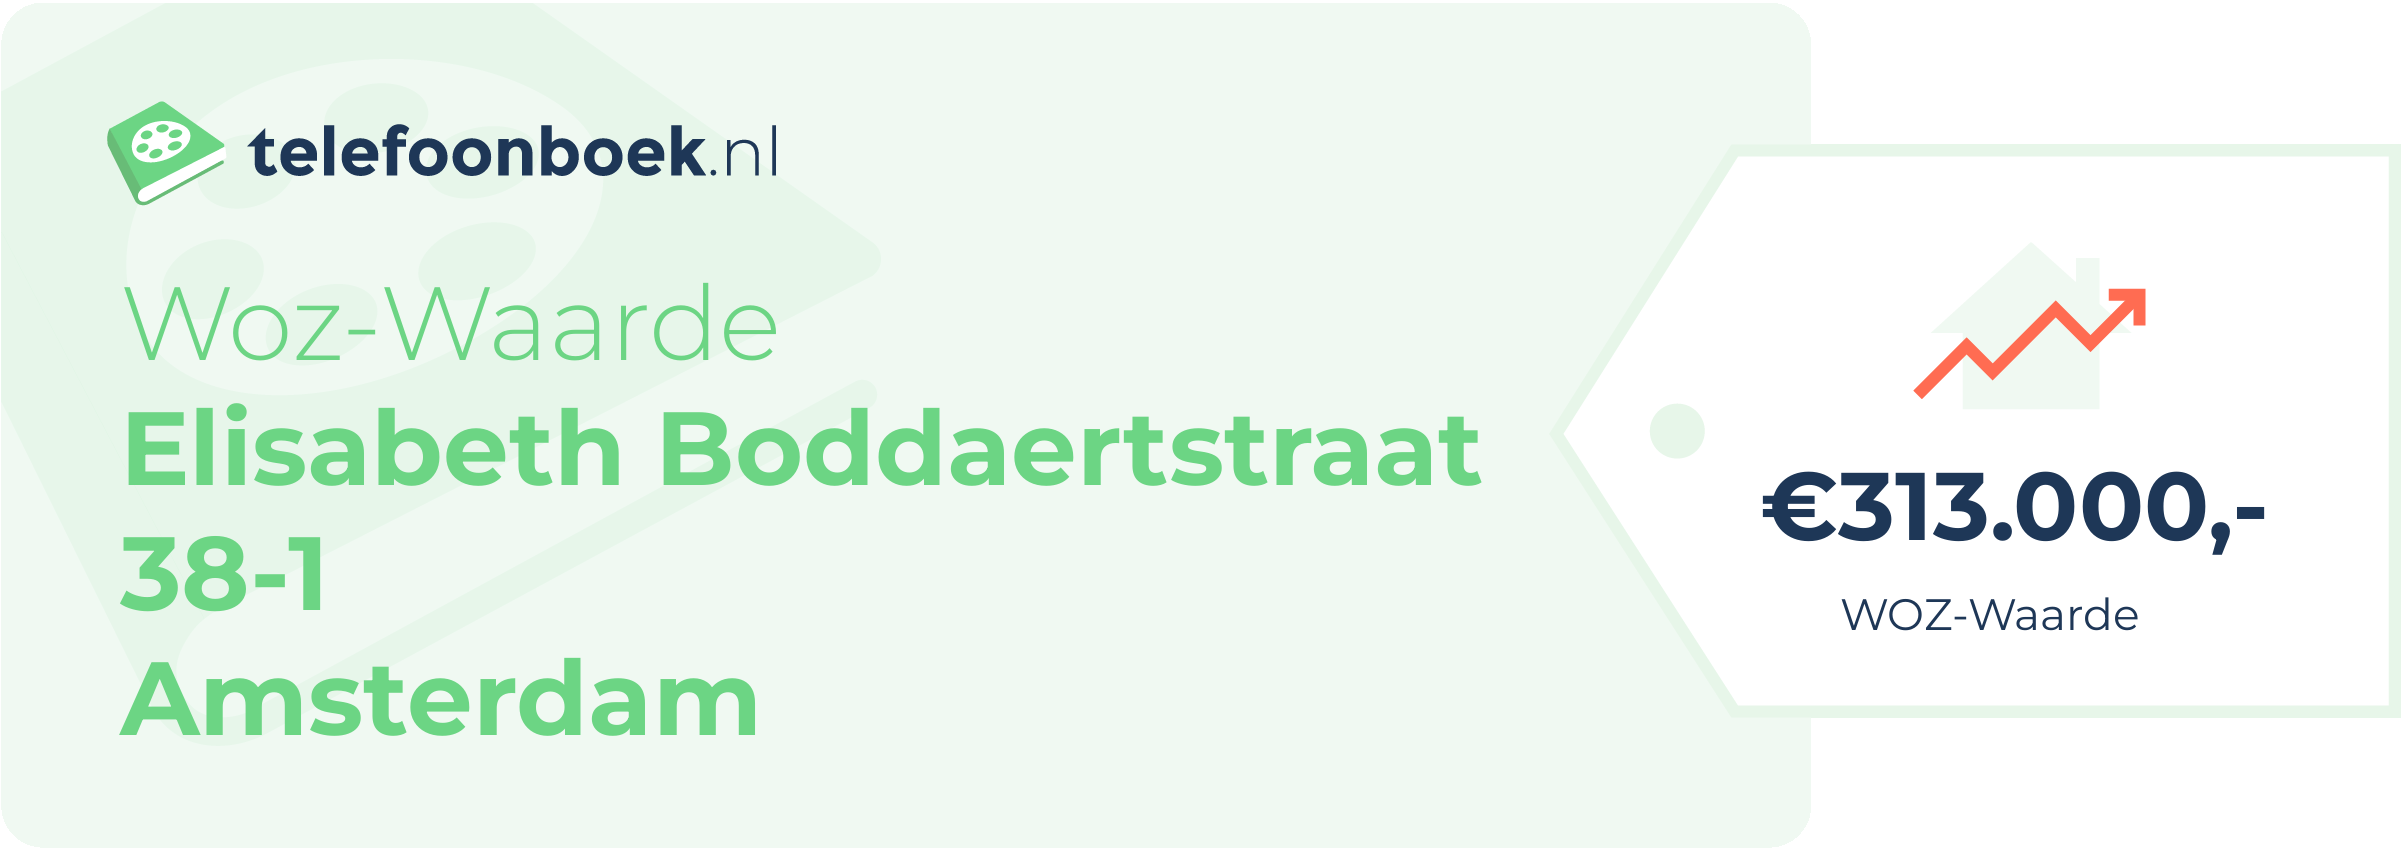 WOZ-waarde Elisabeth Boddaertstraat 38-1 Amsterdam